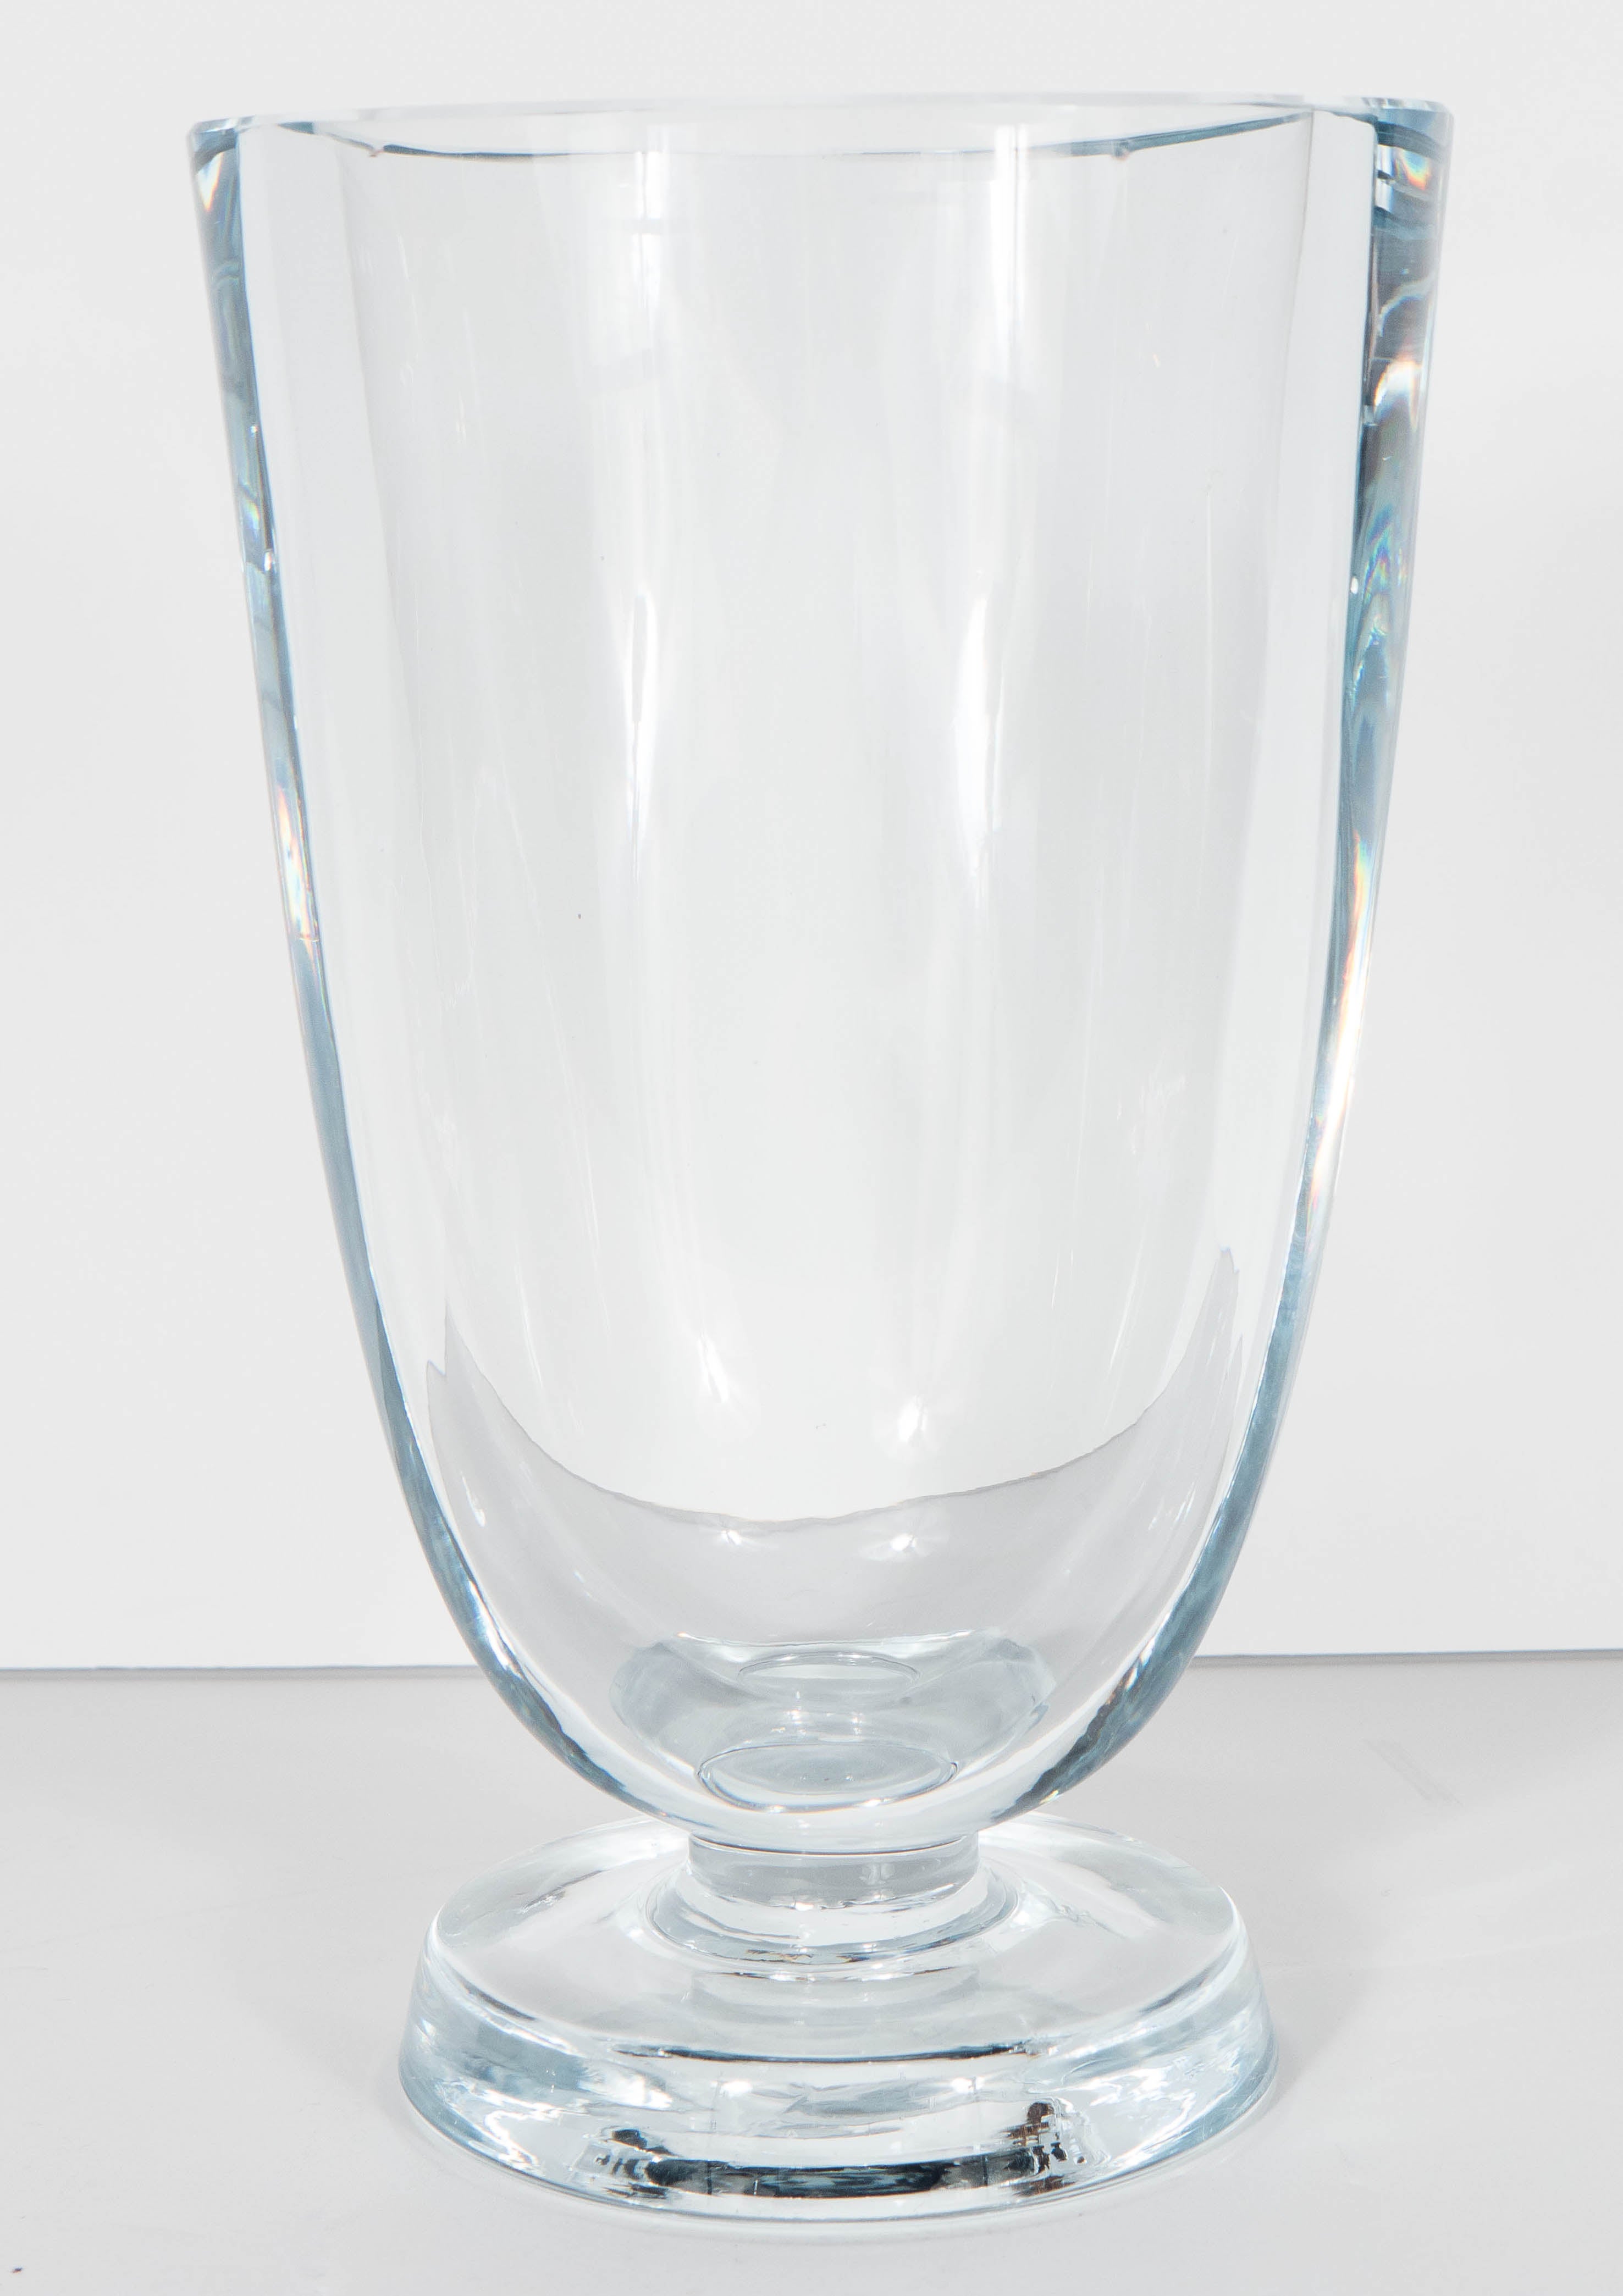 Stunning Mid-Century Modernist Glass Vase by Stromberg in Ice Blue